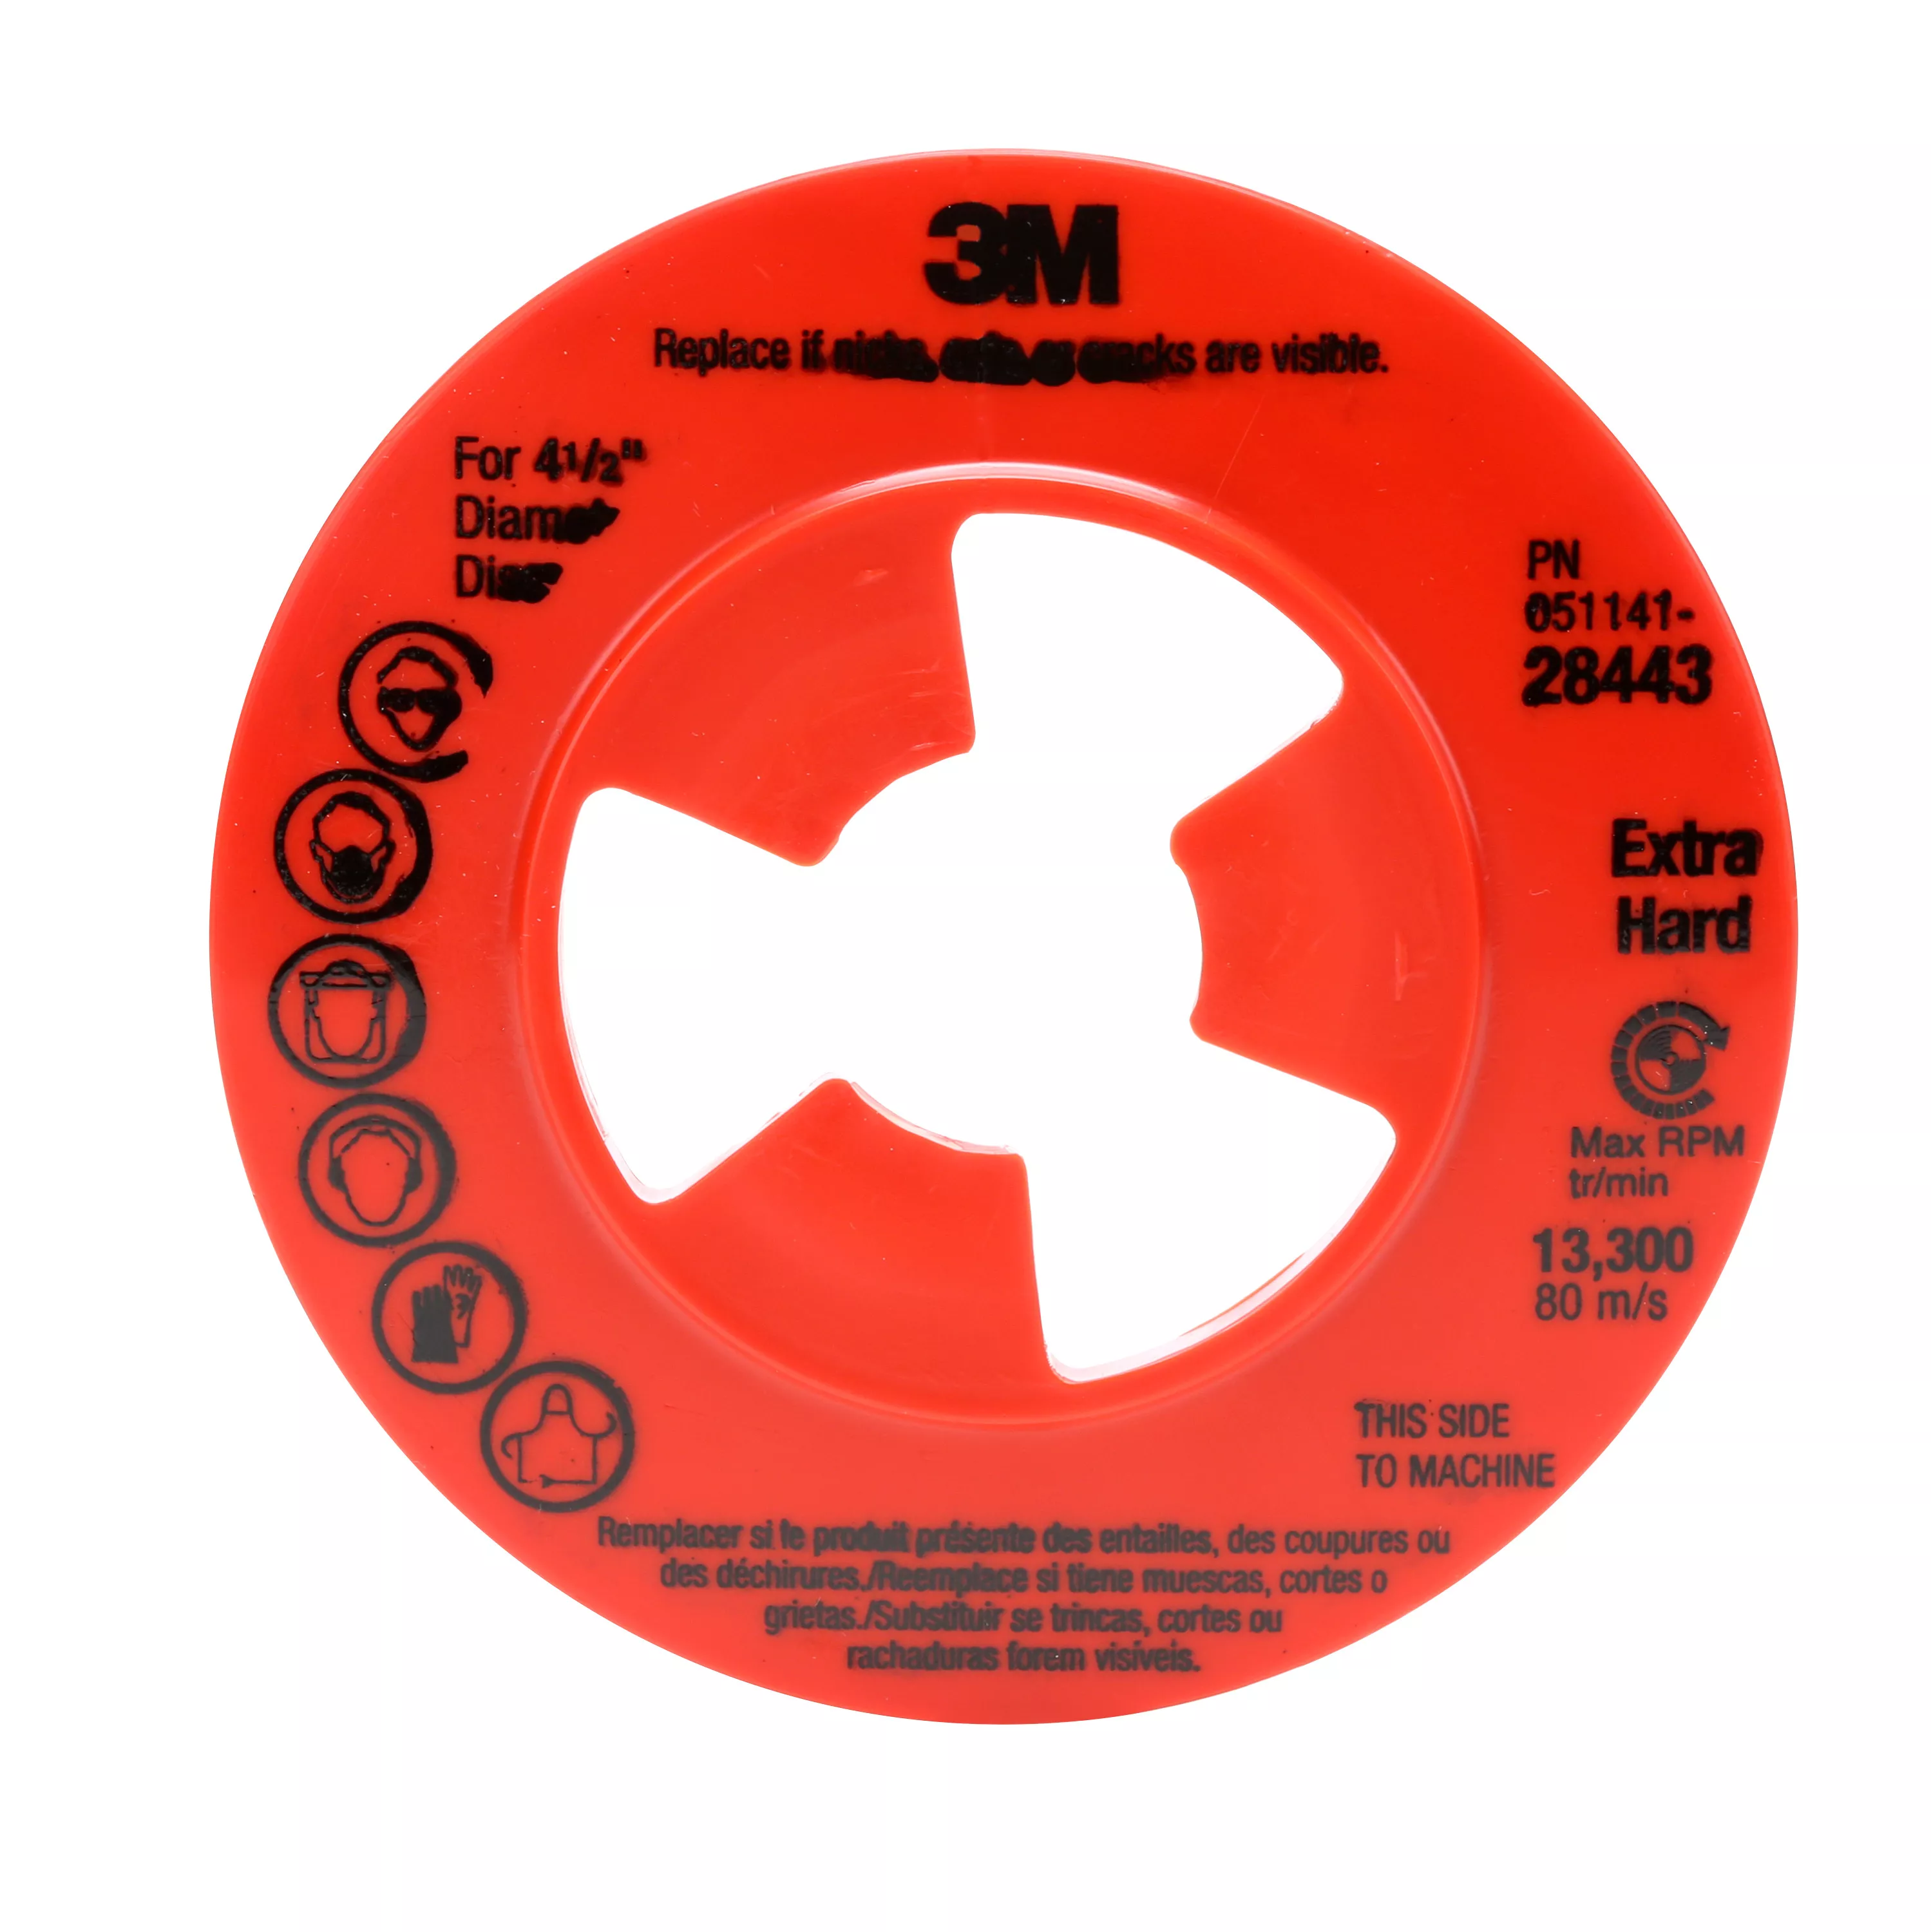 SKU 7000045279 | 3M™ Disc Pad Face Plate Ribbed 28443